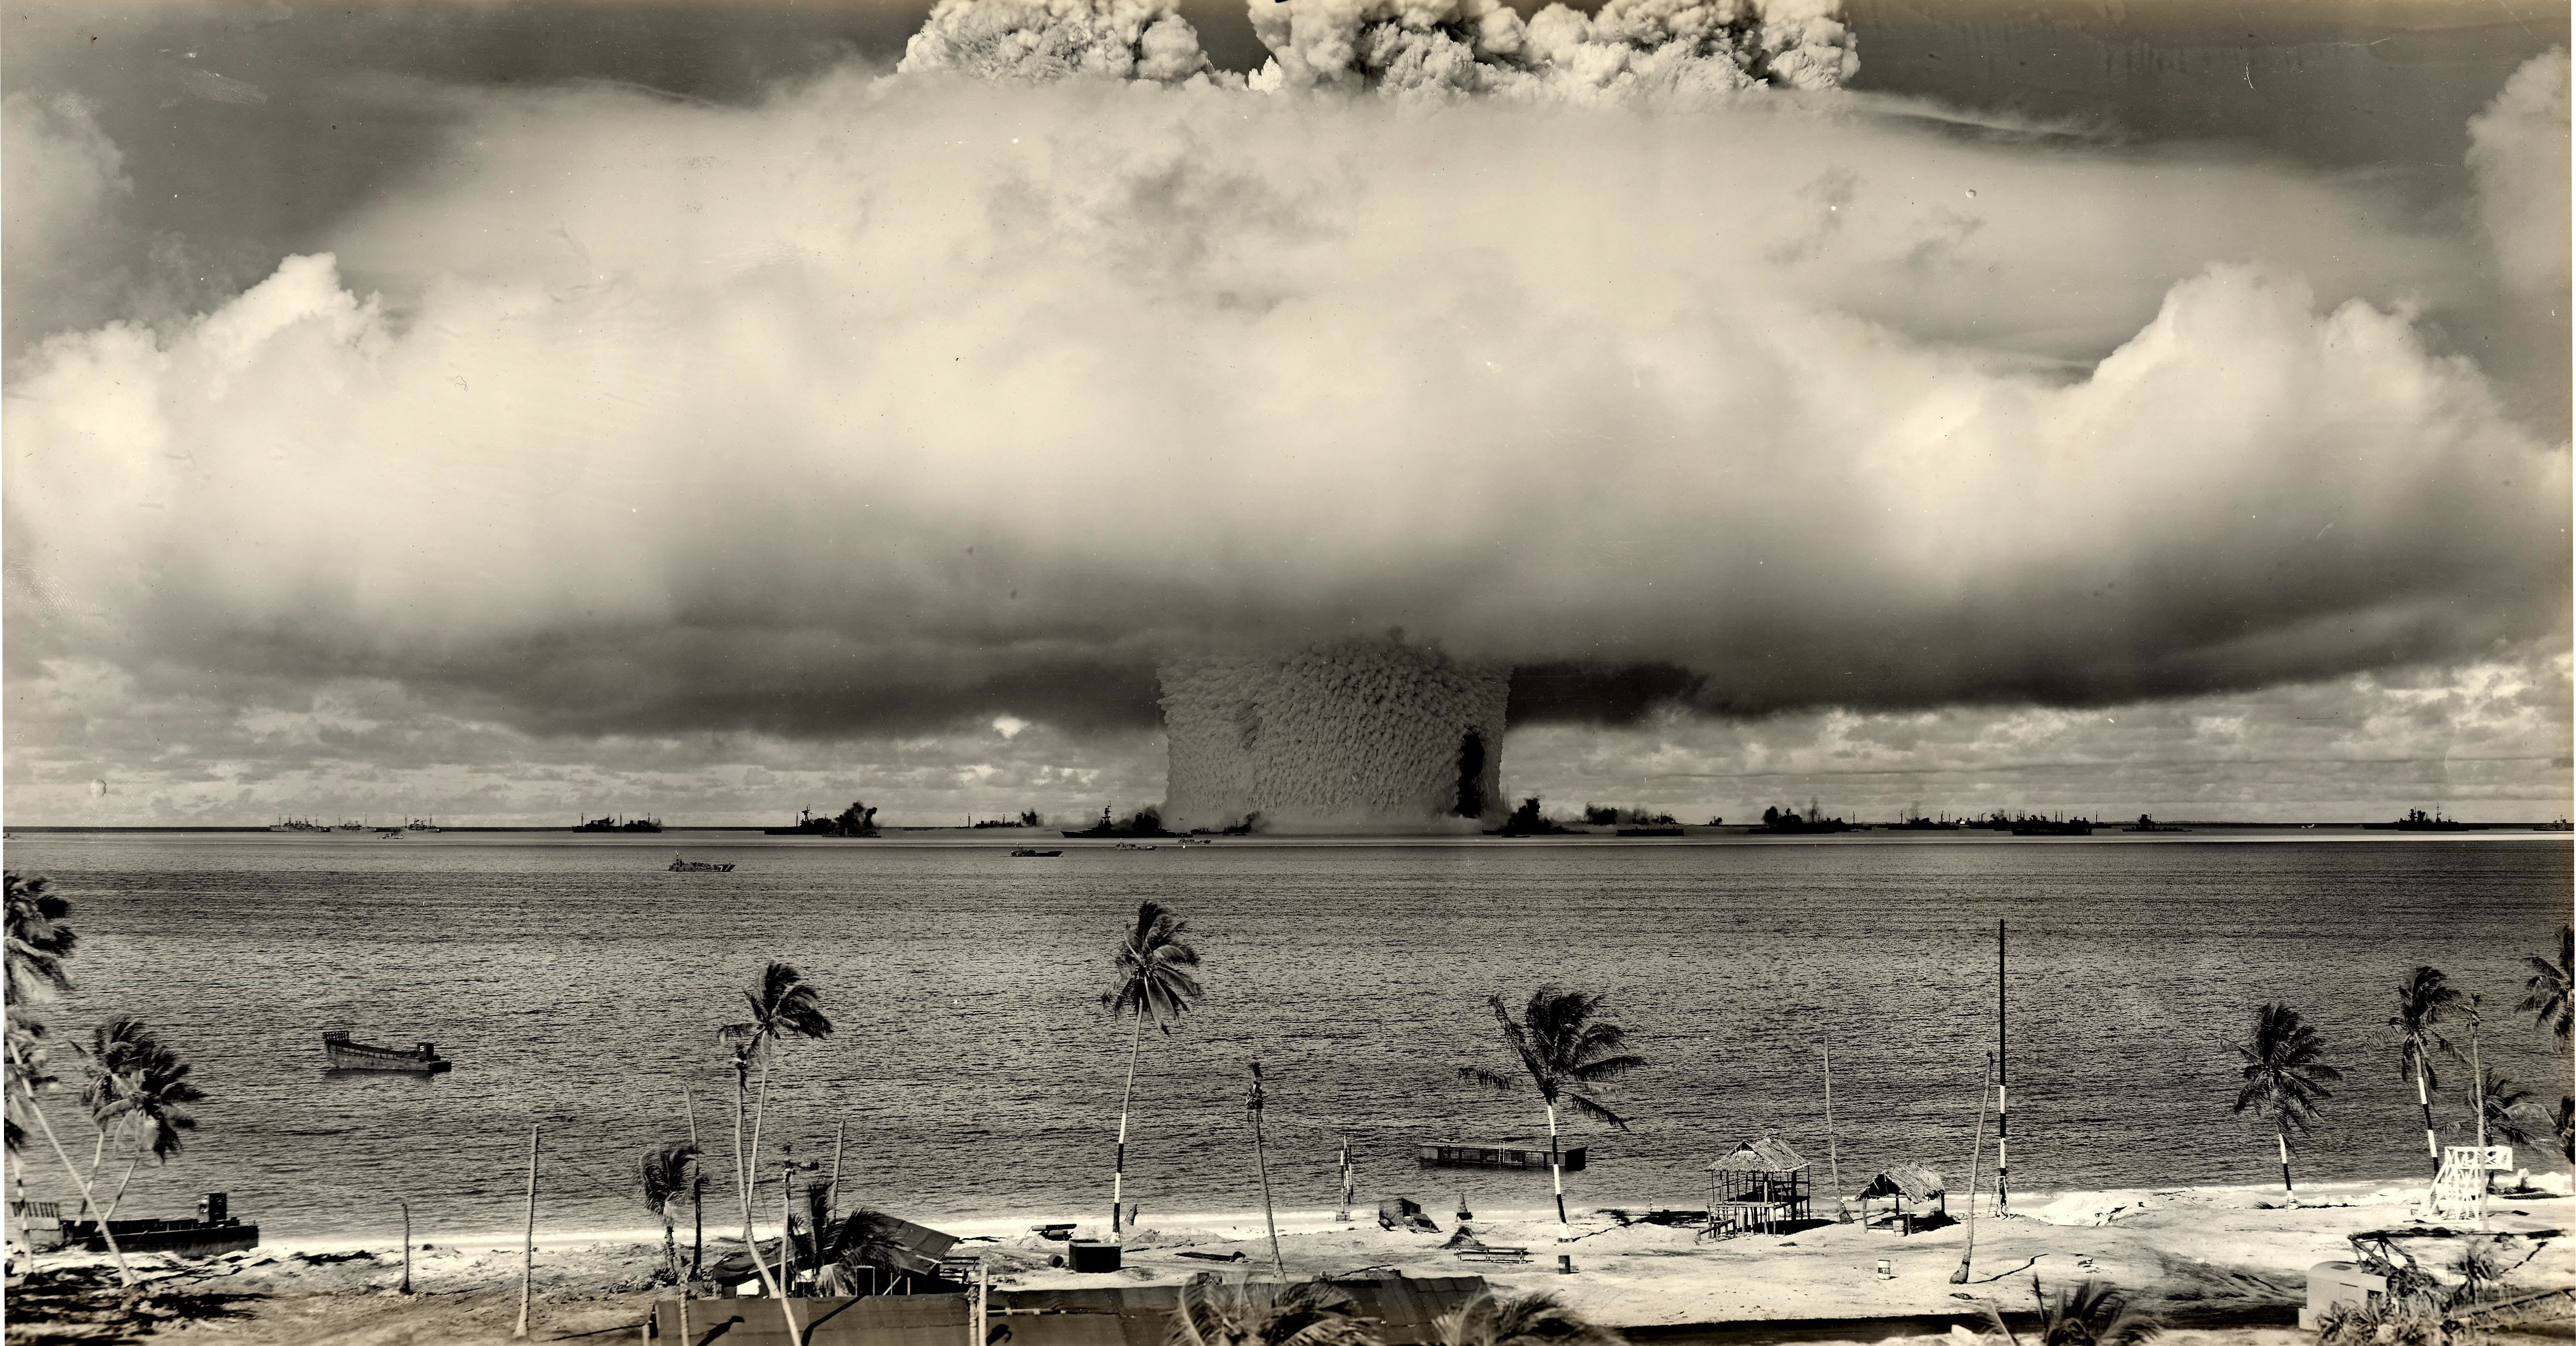 General 5160x2696 military nuclear atomic bomb Bikini Atoll mushroom clouds sepia explosion bombs